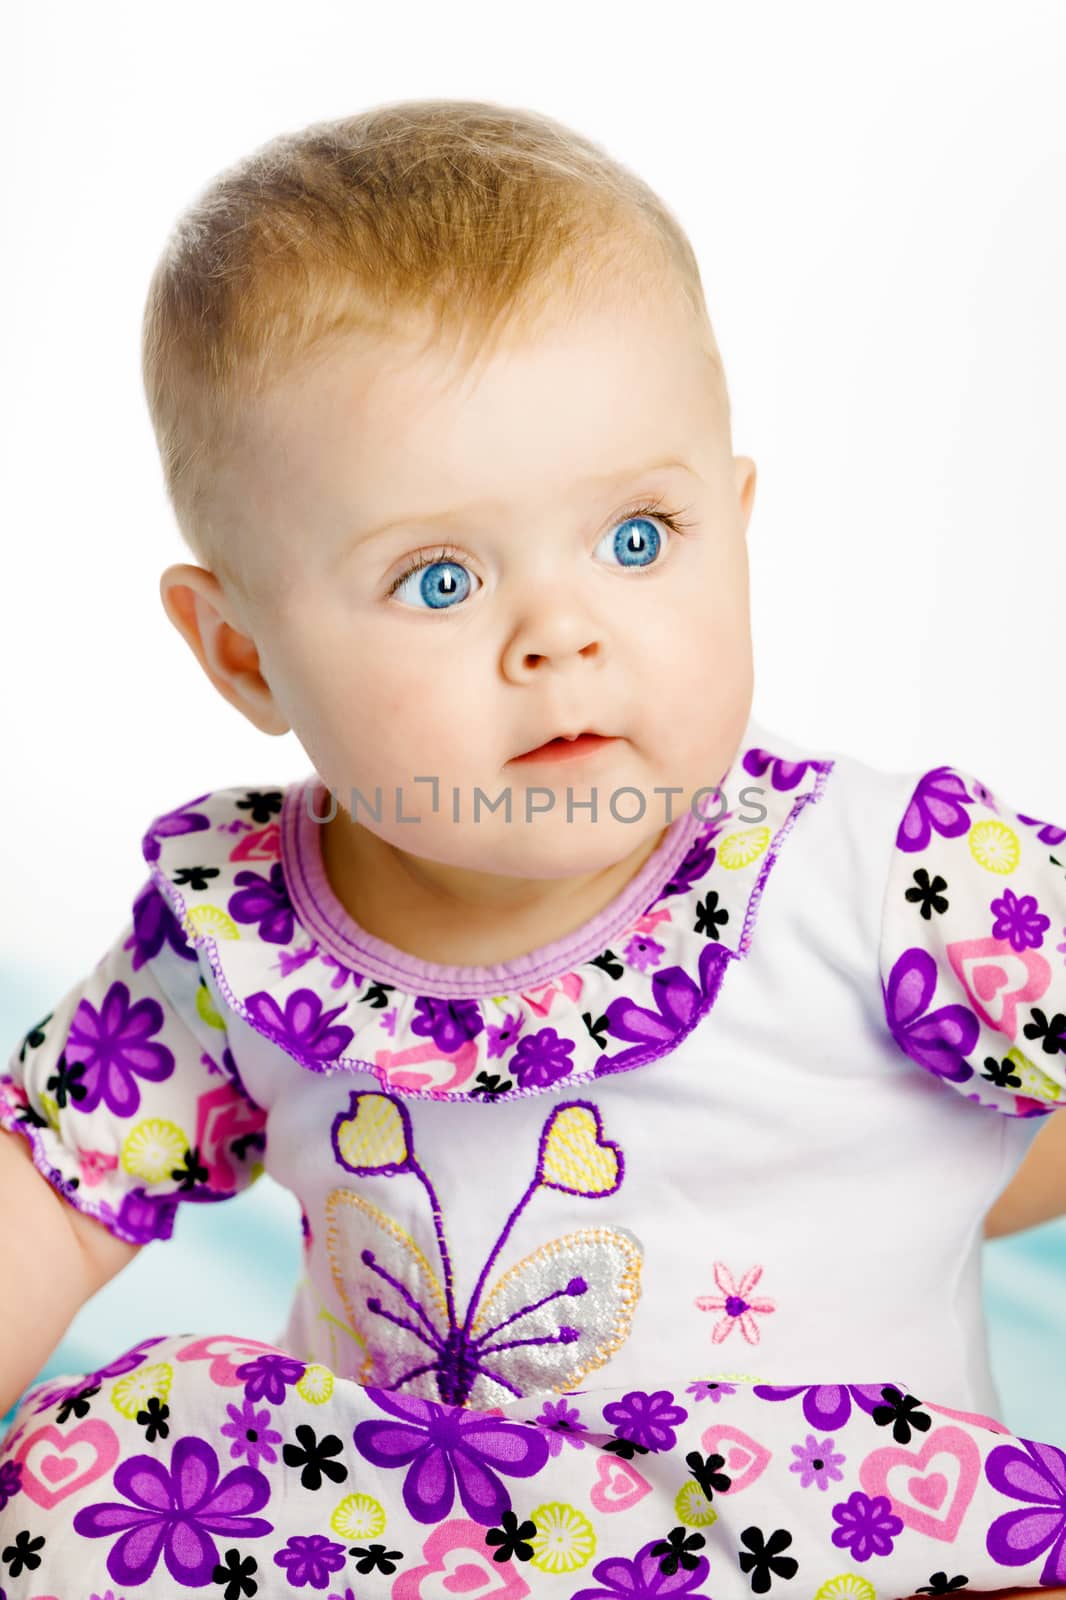 blue-eyed baby girl. Portrait. Close-up by pzRomashka